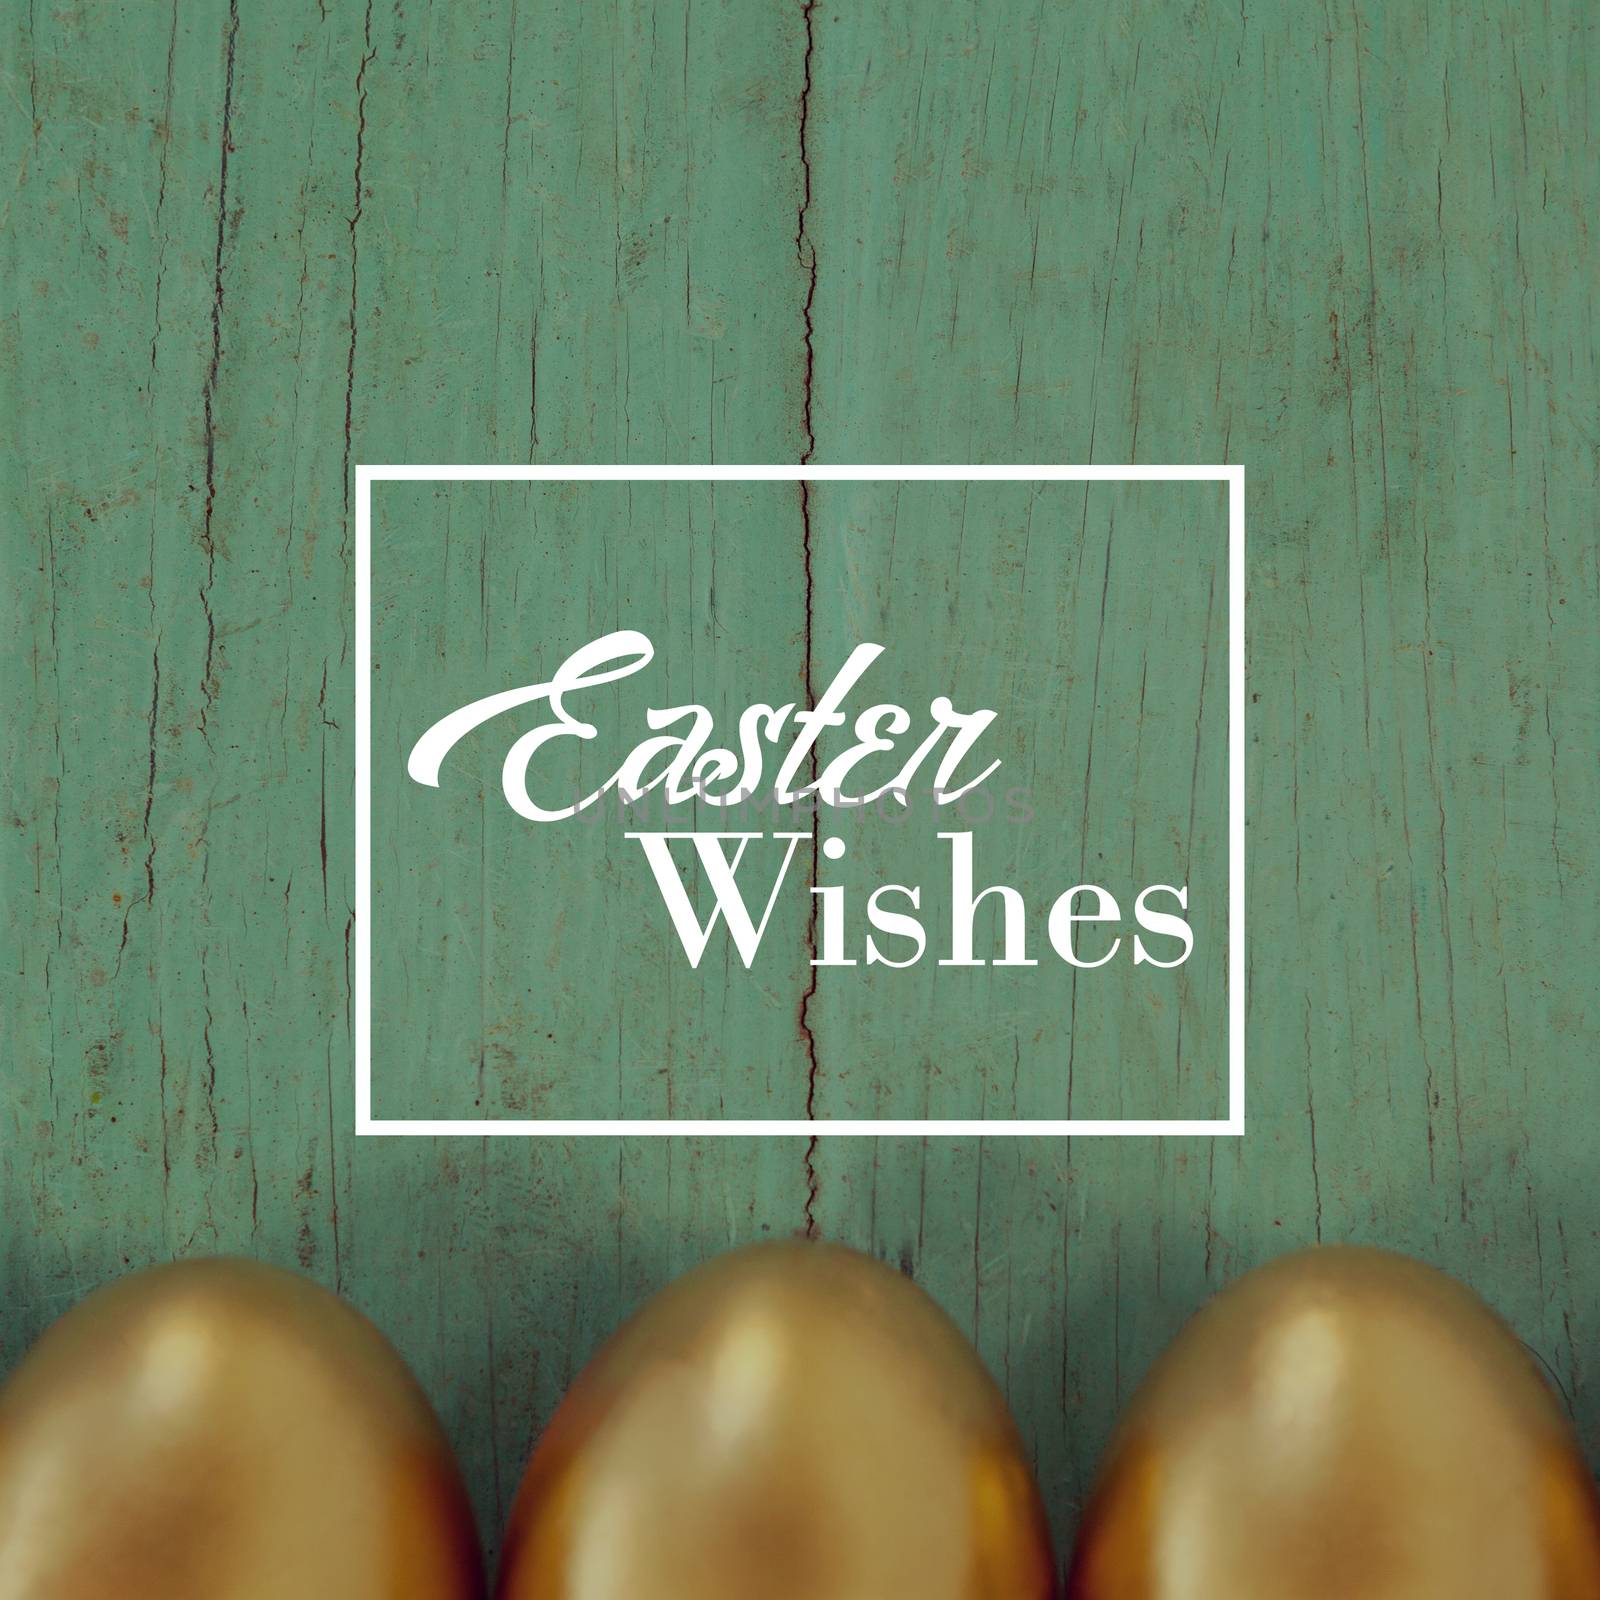 Easter greeting against golden easter eggs arranged on wooden surface